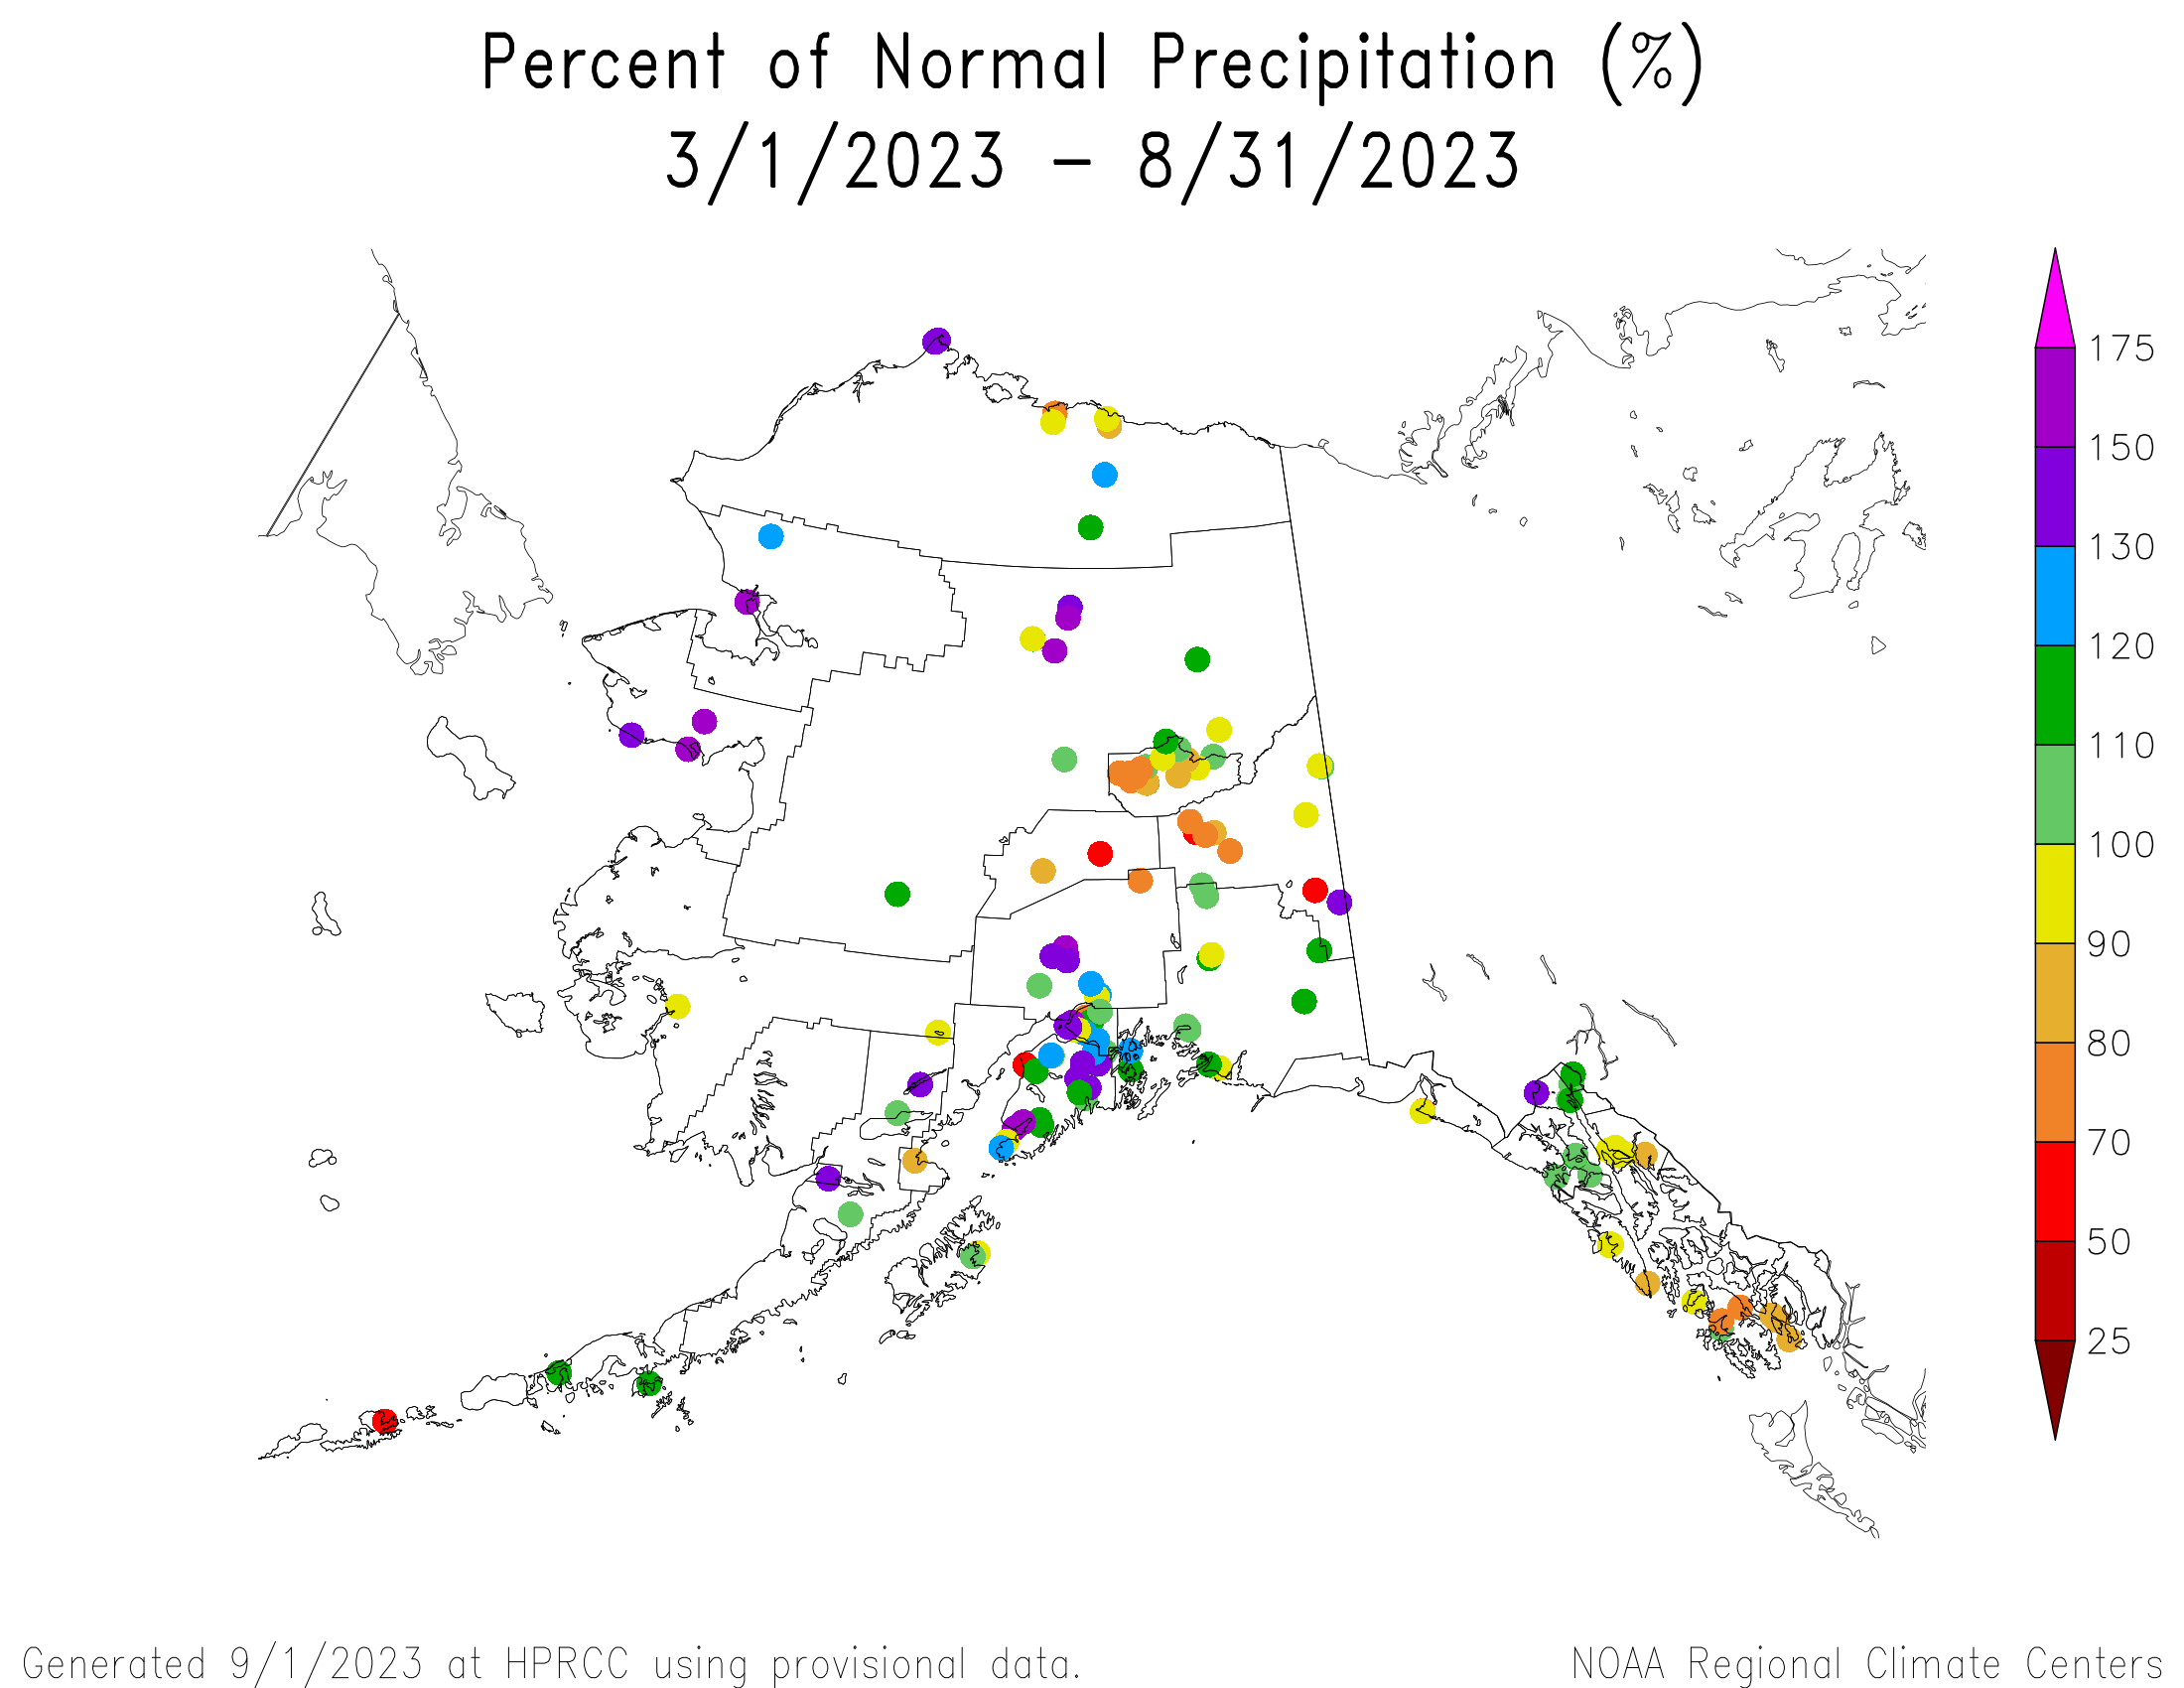 Alaska Station Percent of Normal Precipitation, March-August 2023